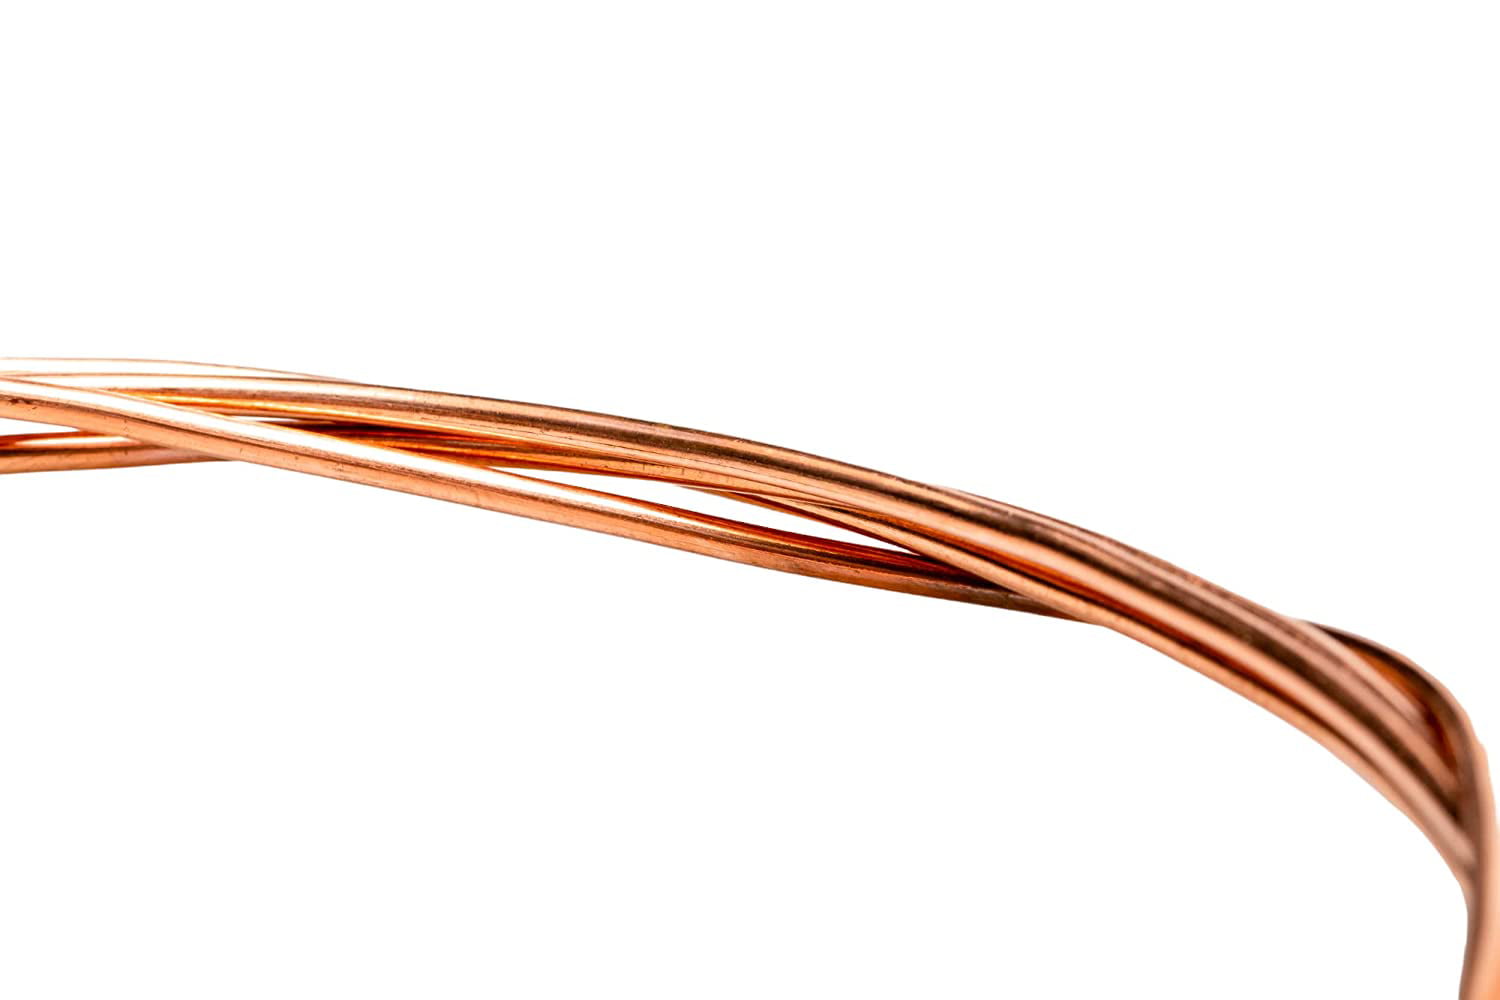 16 Gauge, 99.9% Pure Copper Wire (Round) Half Hard CDA #110 Made in USA - 50ft by Craft Wire